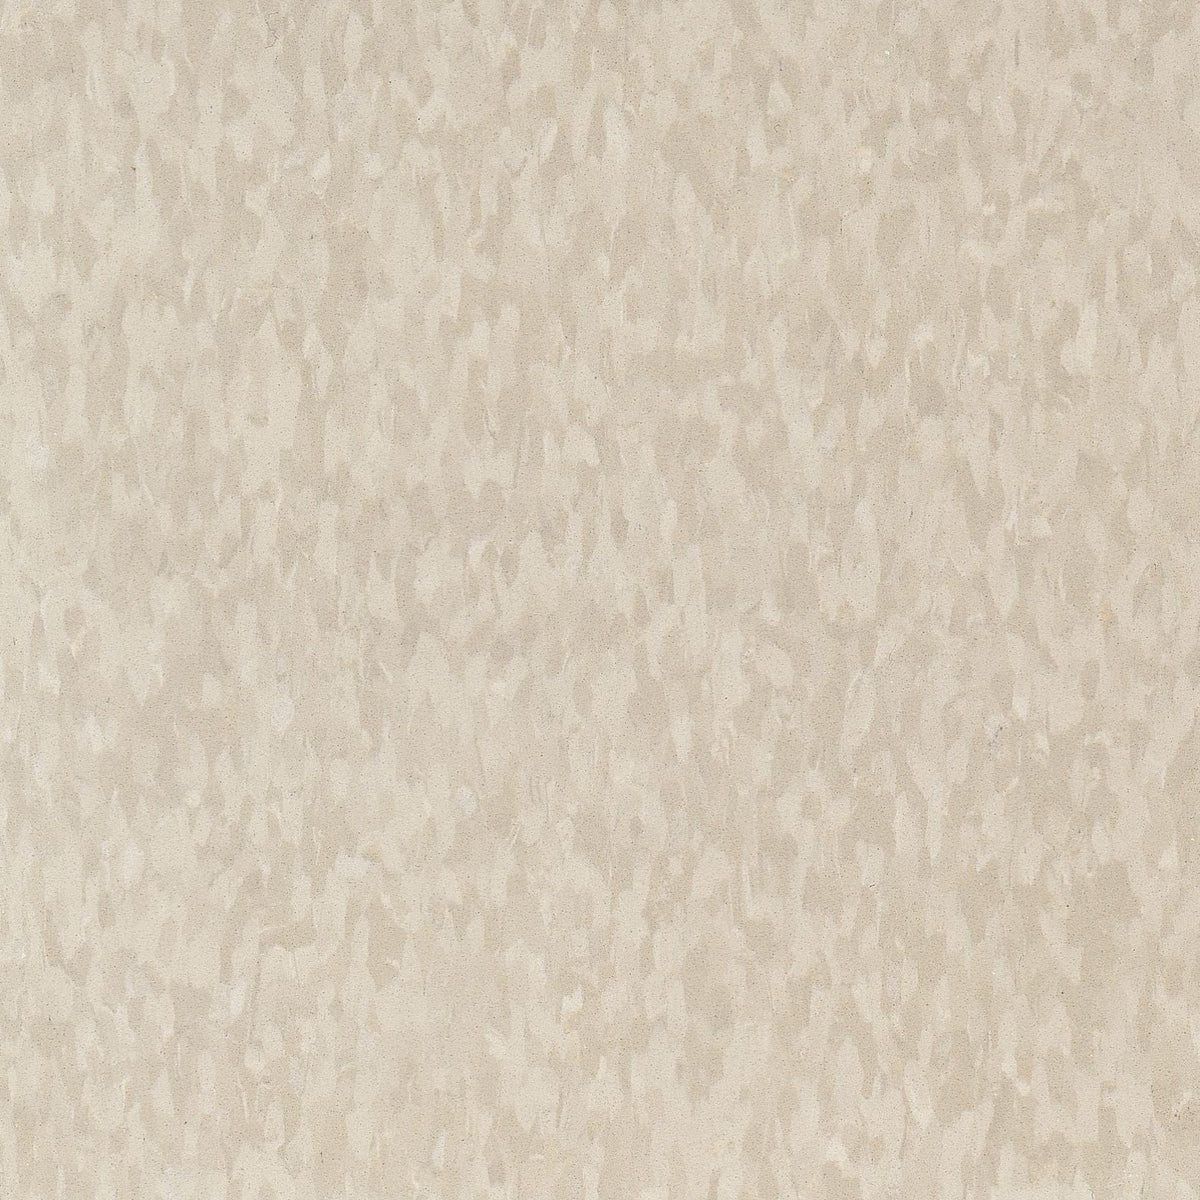 Armstrong Commercial - Standard Excelon Imperial Texture - Vinyl Composition Tile (VCT) - Mint Cream